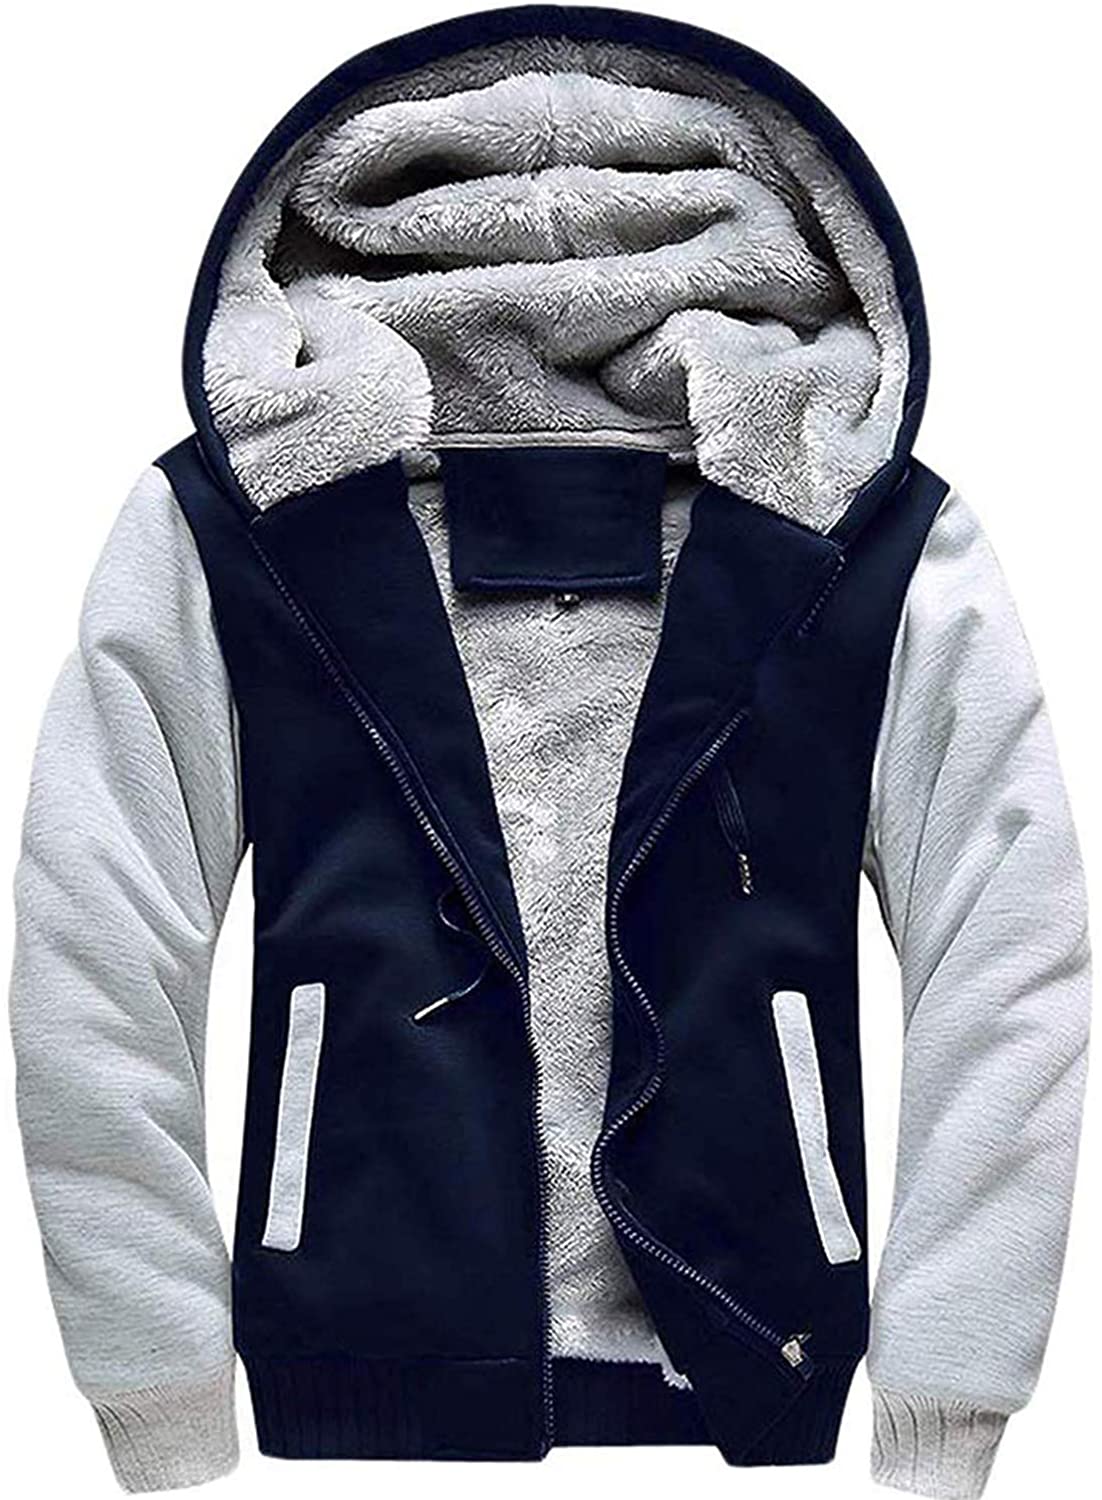 Men's Zip Up Hoodie Heavyweight Winter Sweatshirt Fleece Sherpa Lined Warm Jacket